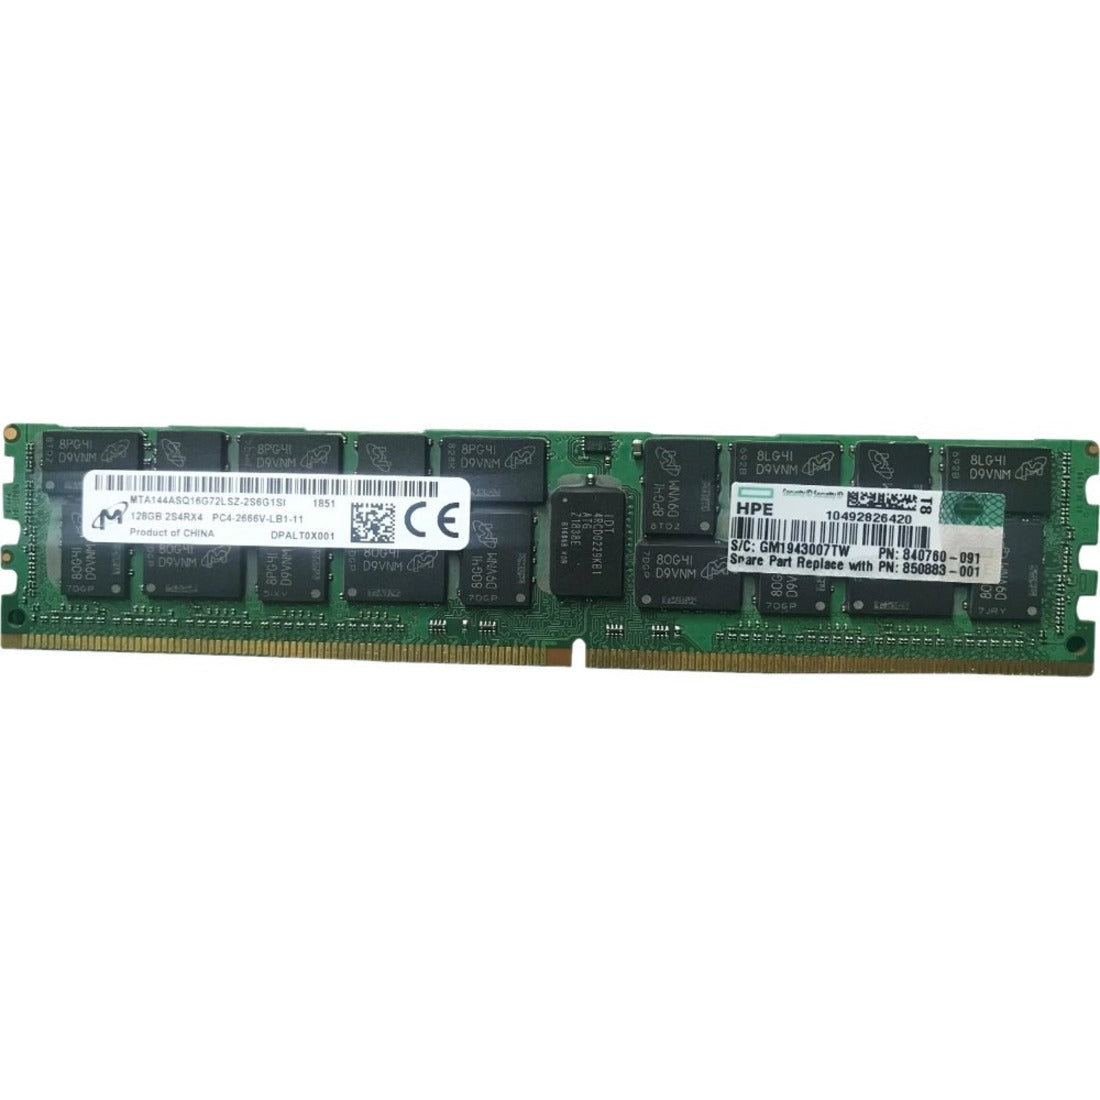 HPE 850883-001 128GB DDR4 SDRAM Memory Module, High Performance RAM for Servers